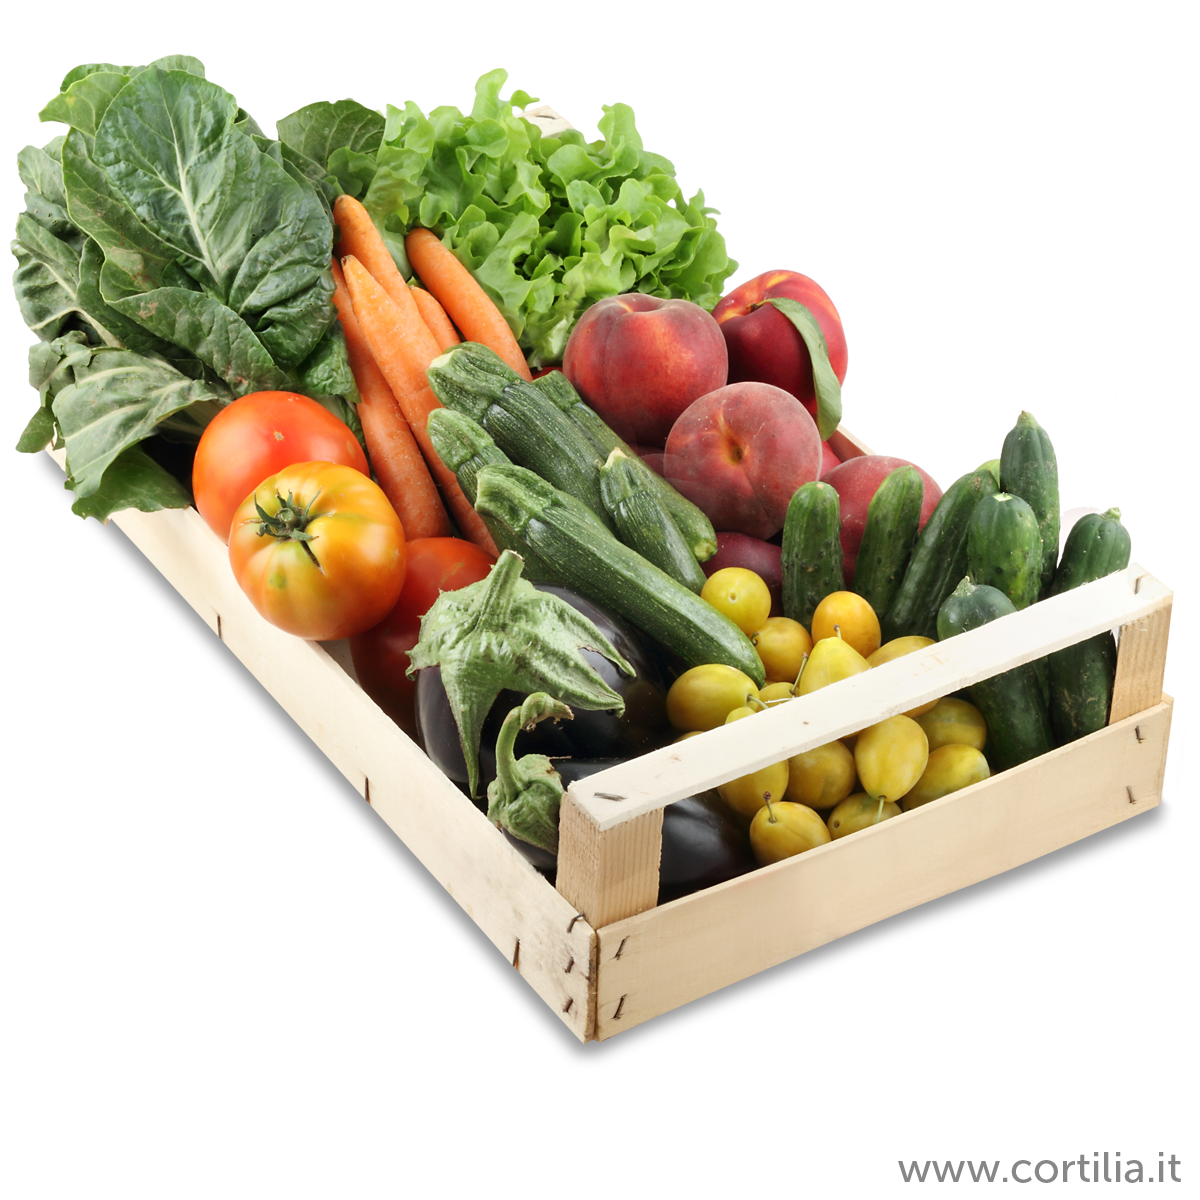 Vegetable products. Овощи и фрукты. Овощи в ящике. Корзина с овощами и фруктами. Овощи на белом фоне.